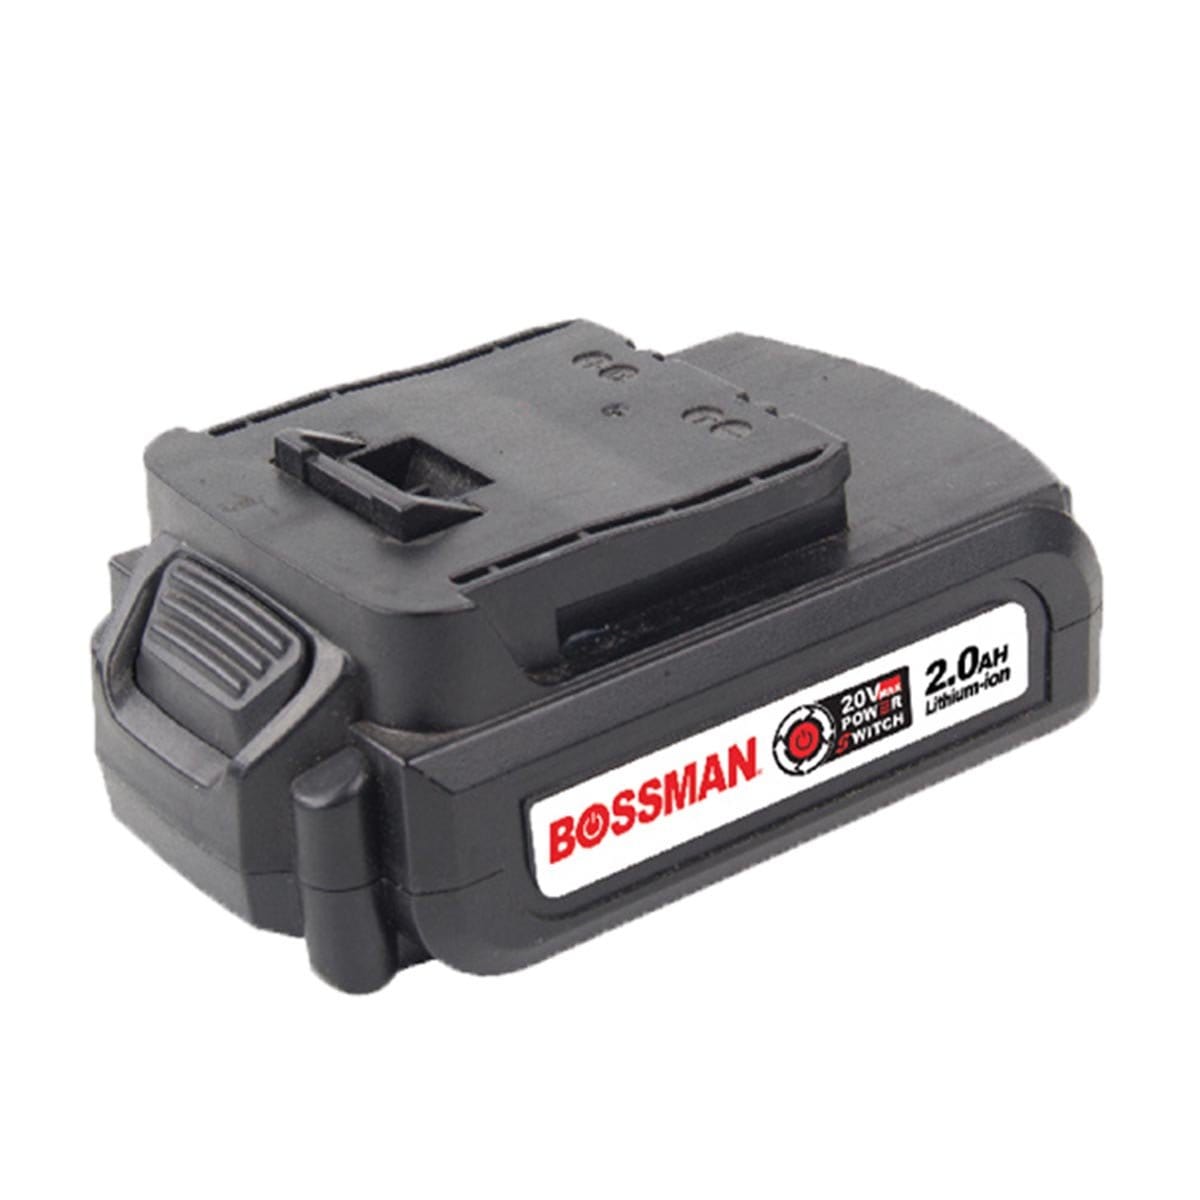 BOSSMAN Cordless Li-Ion Battery BB20V-4*20V x 4.0Ah